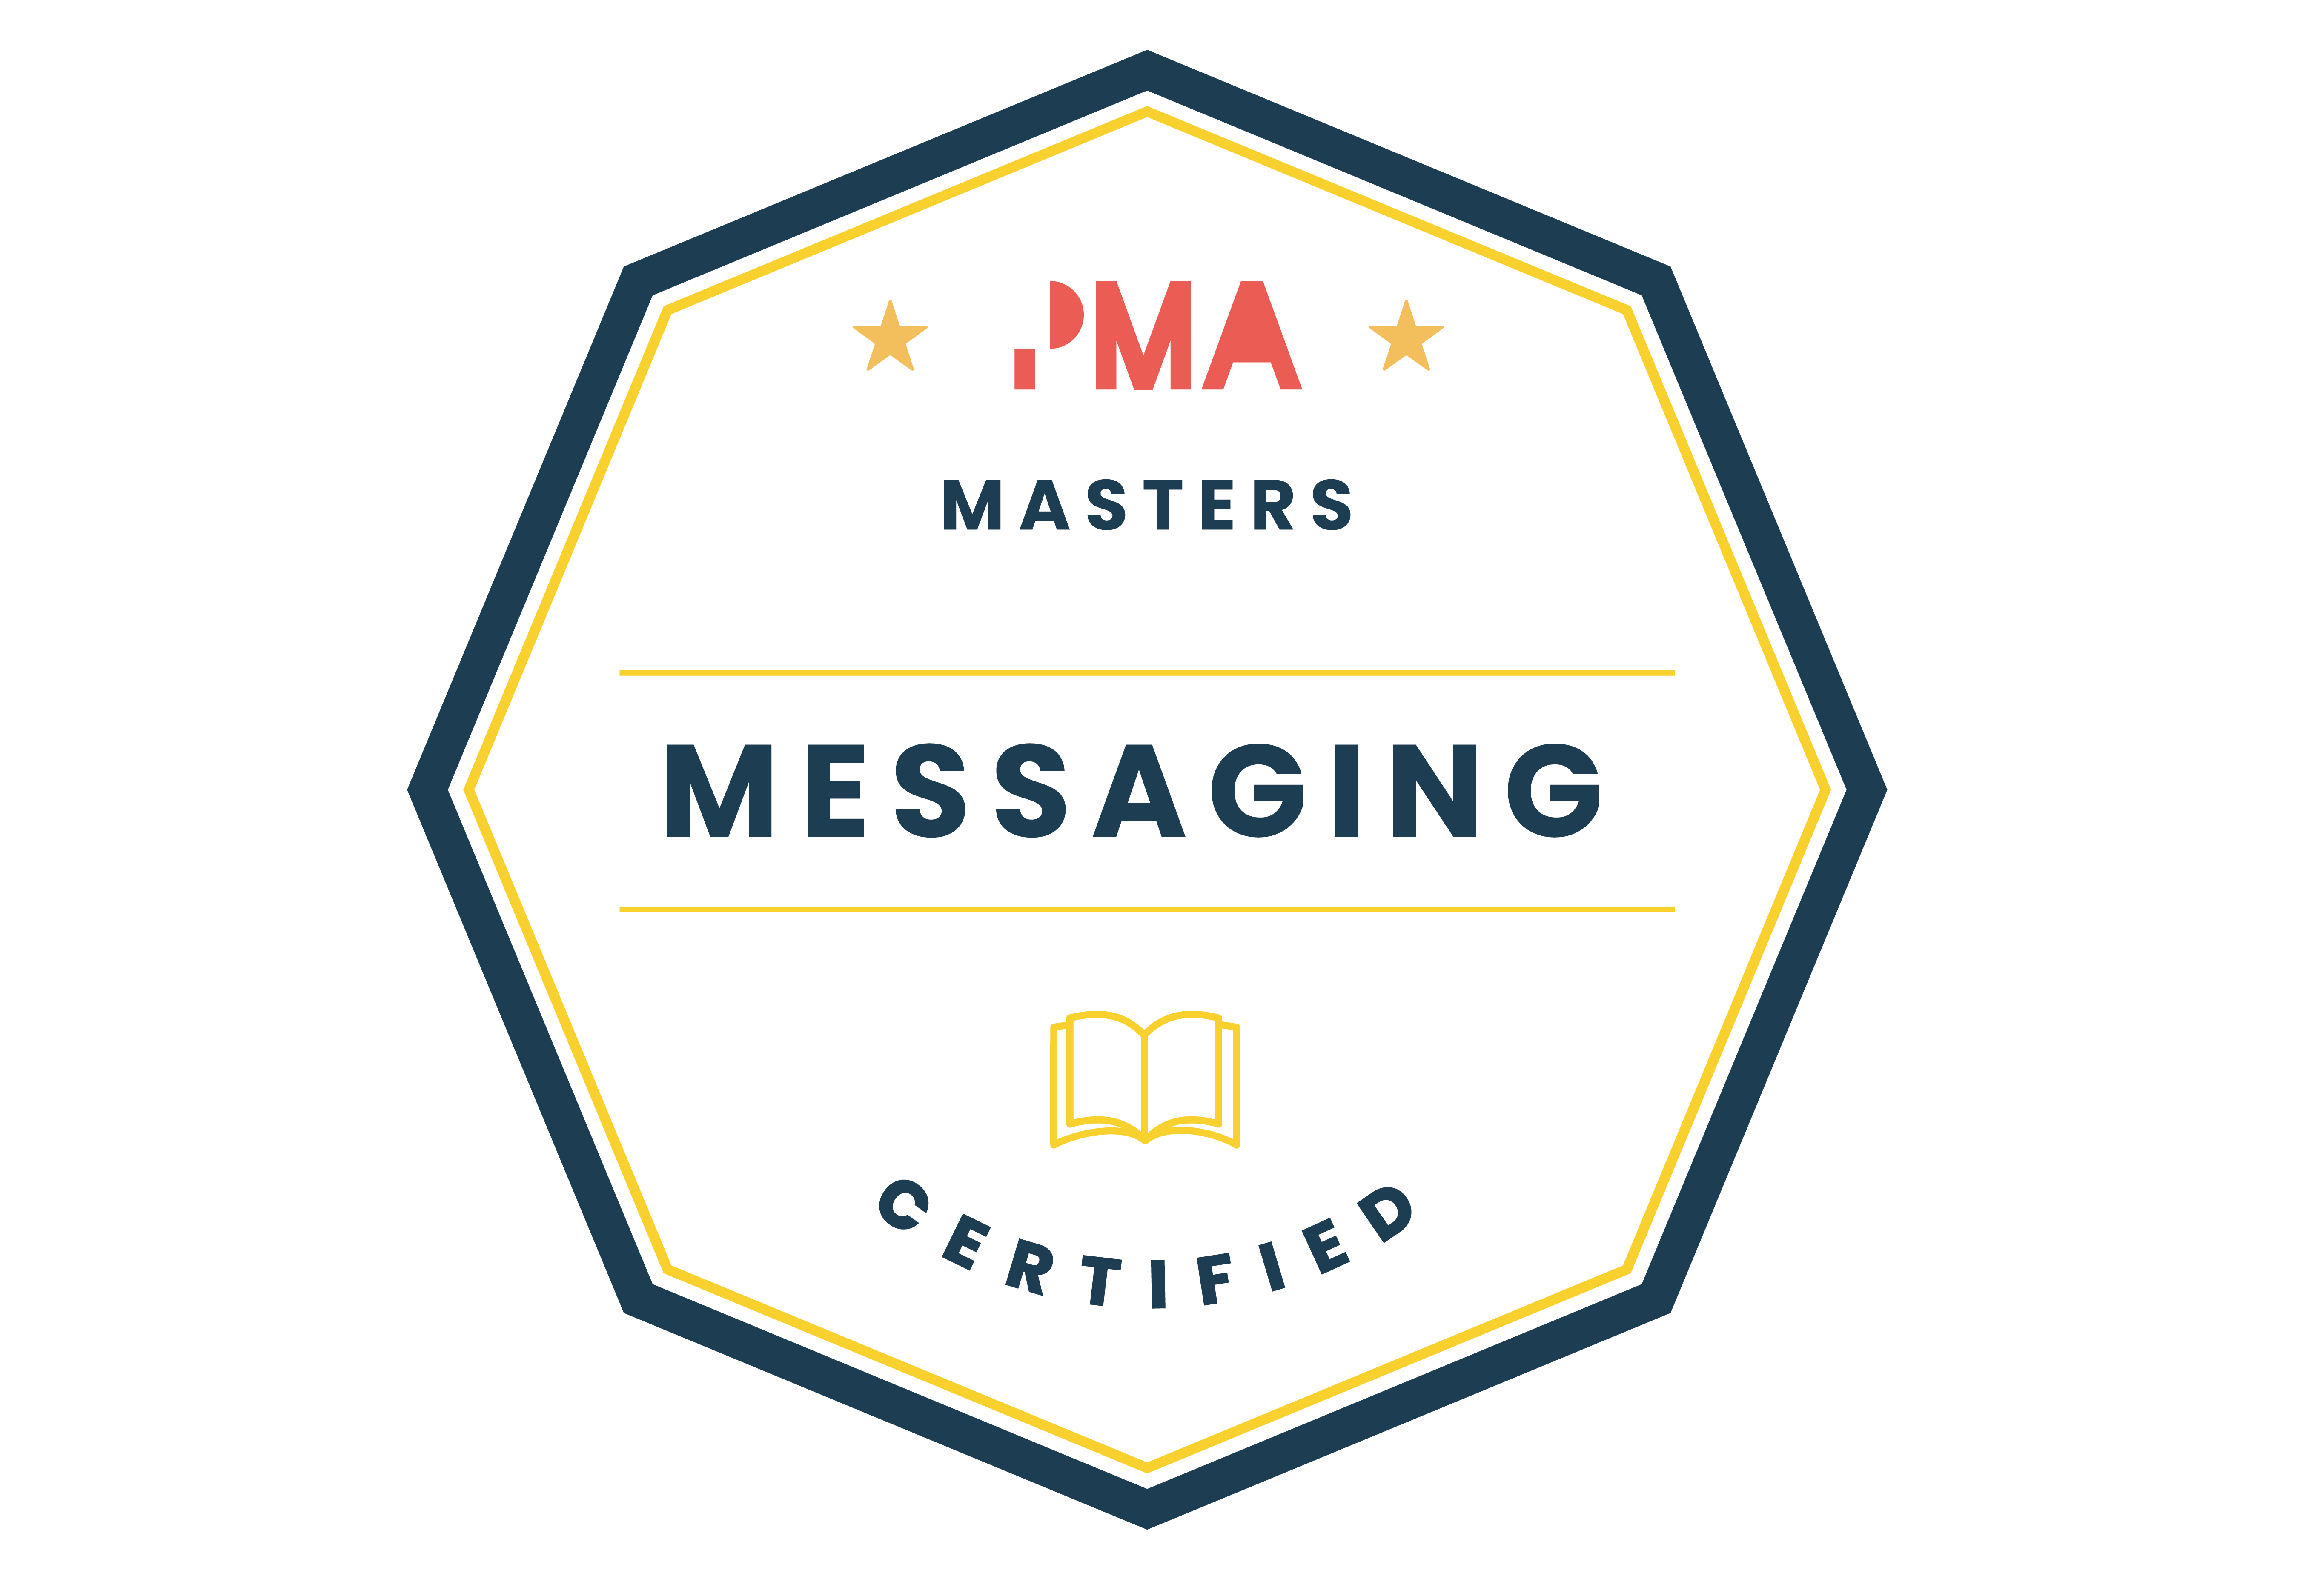 Messaging Certified | Masters badge 